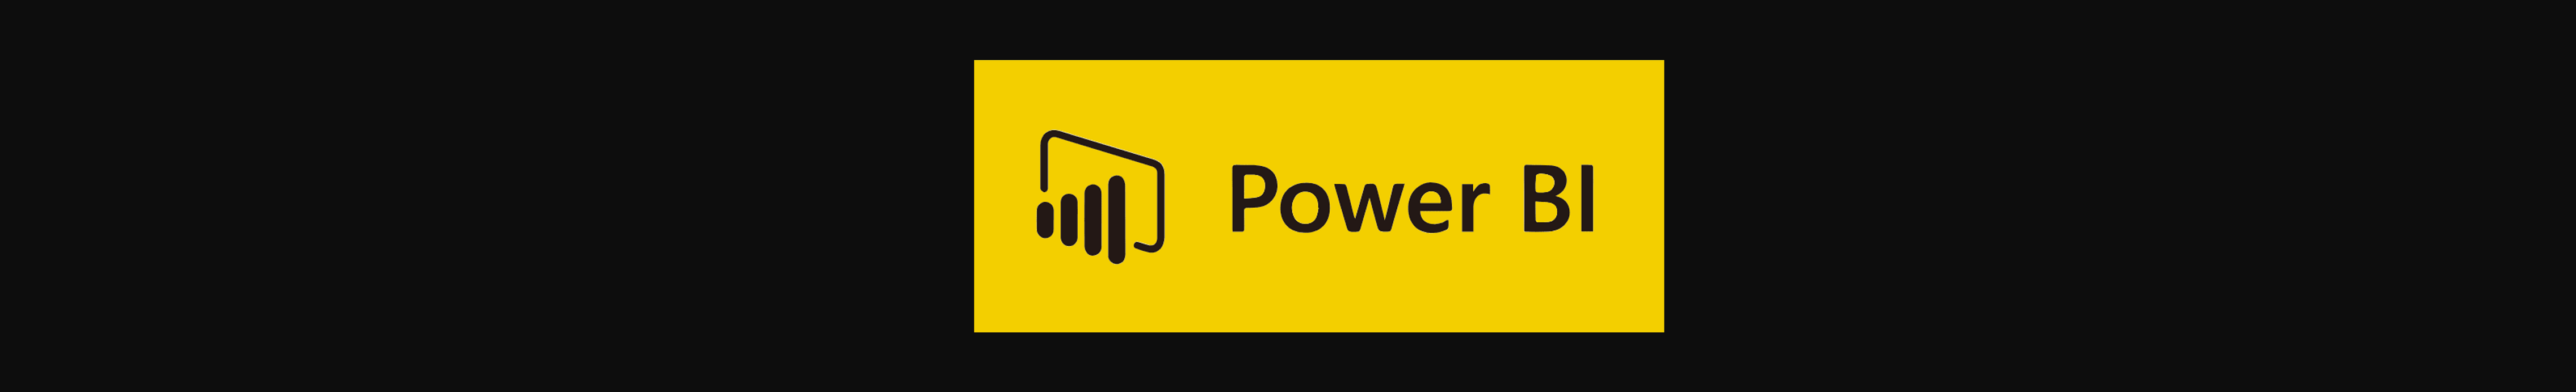 Power BI Logo - Top 10 Data Analytics Tools - Edureka